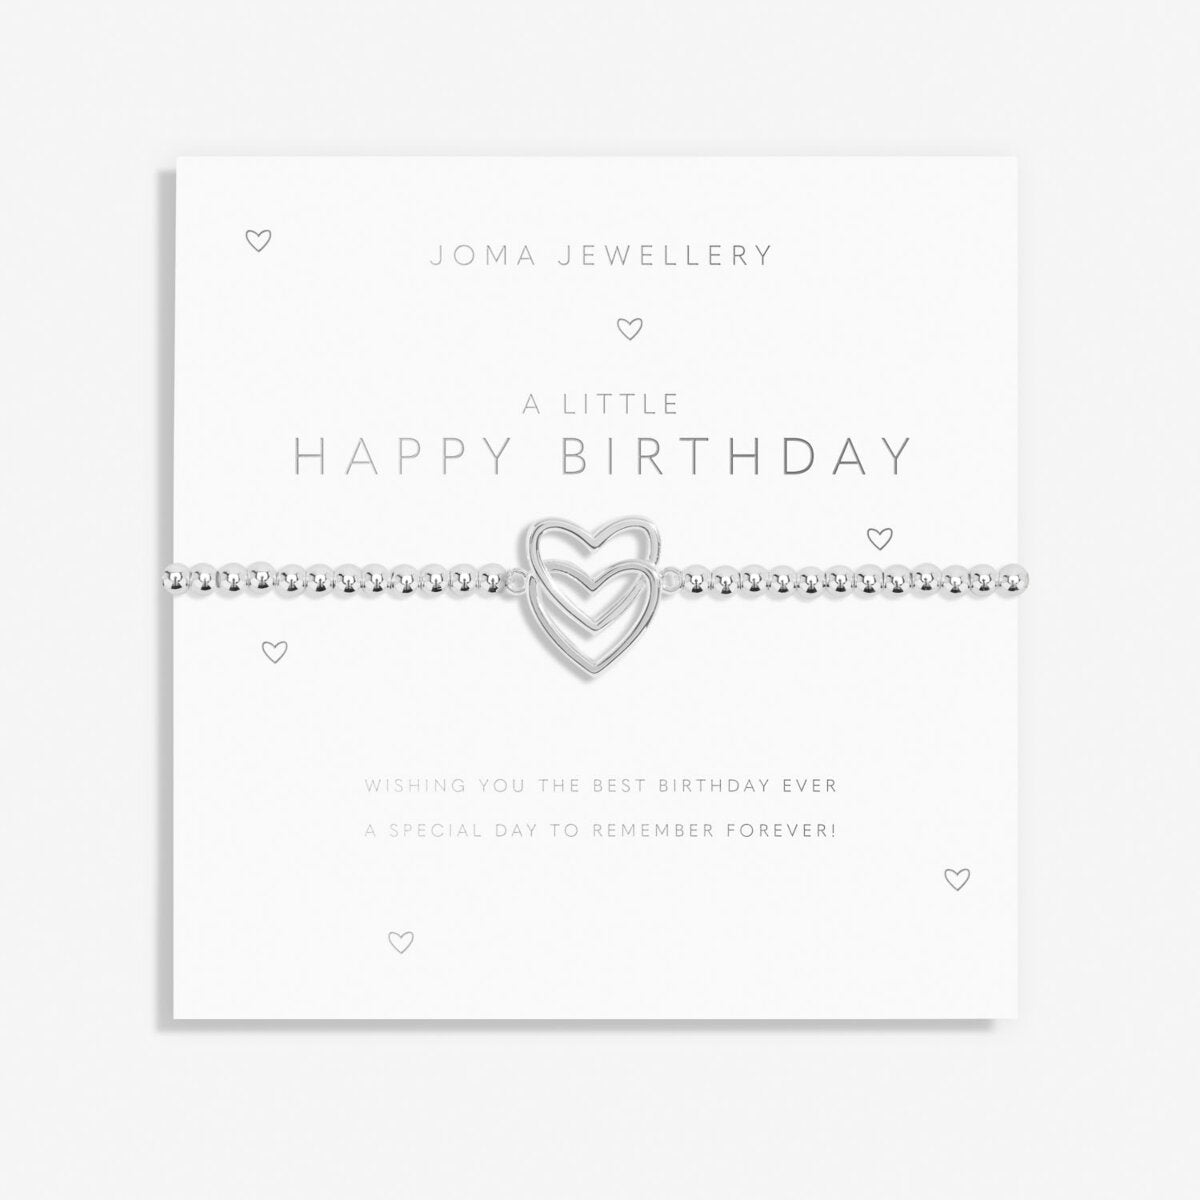 JOMA JEWELLERY | A LITTLE | HAPPY BIRTHDAY BRACELET